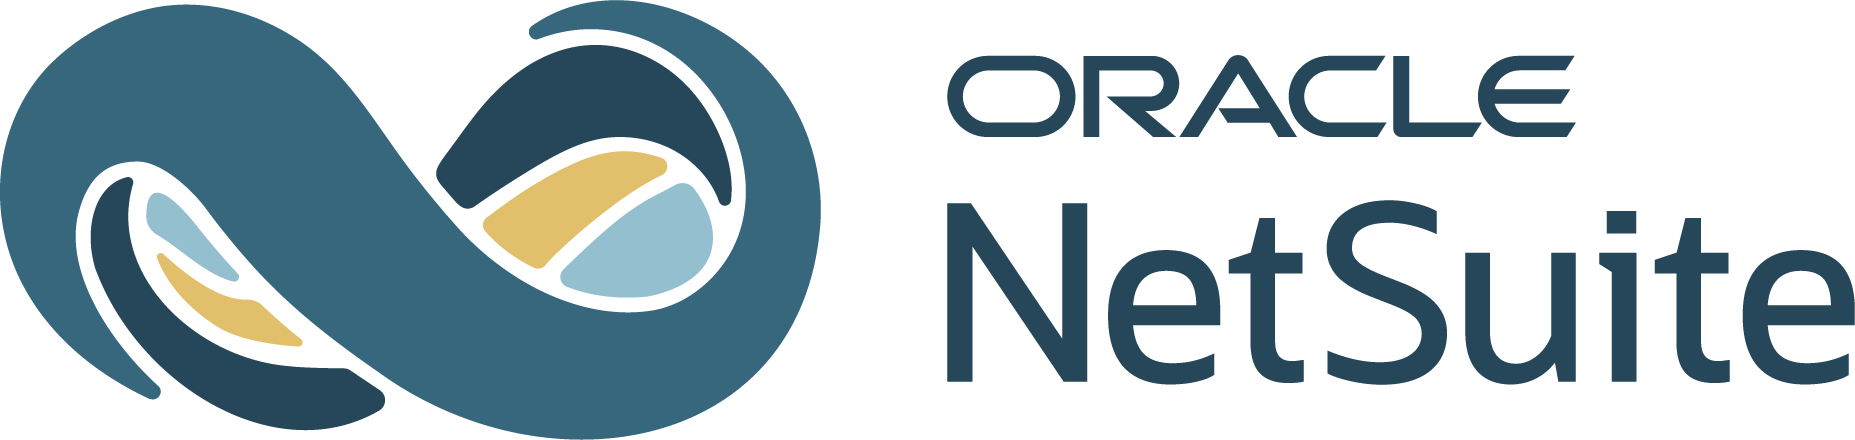 NetSuite logo half light